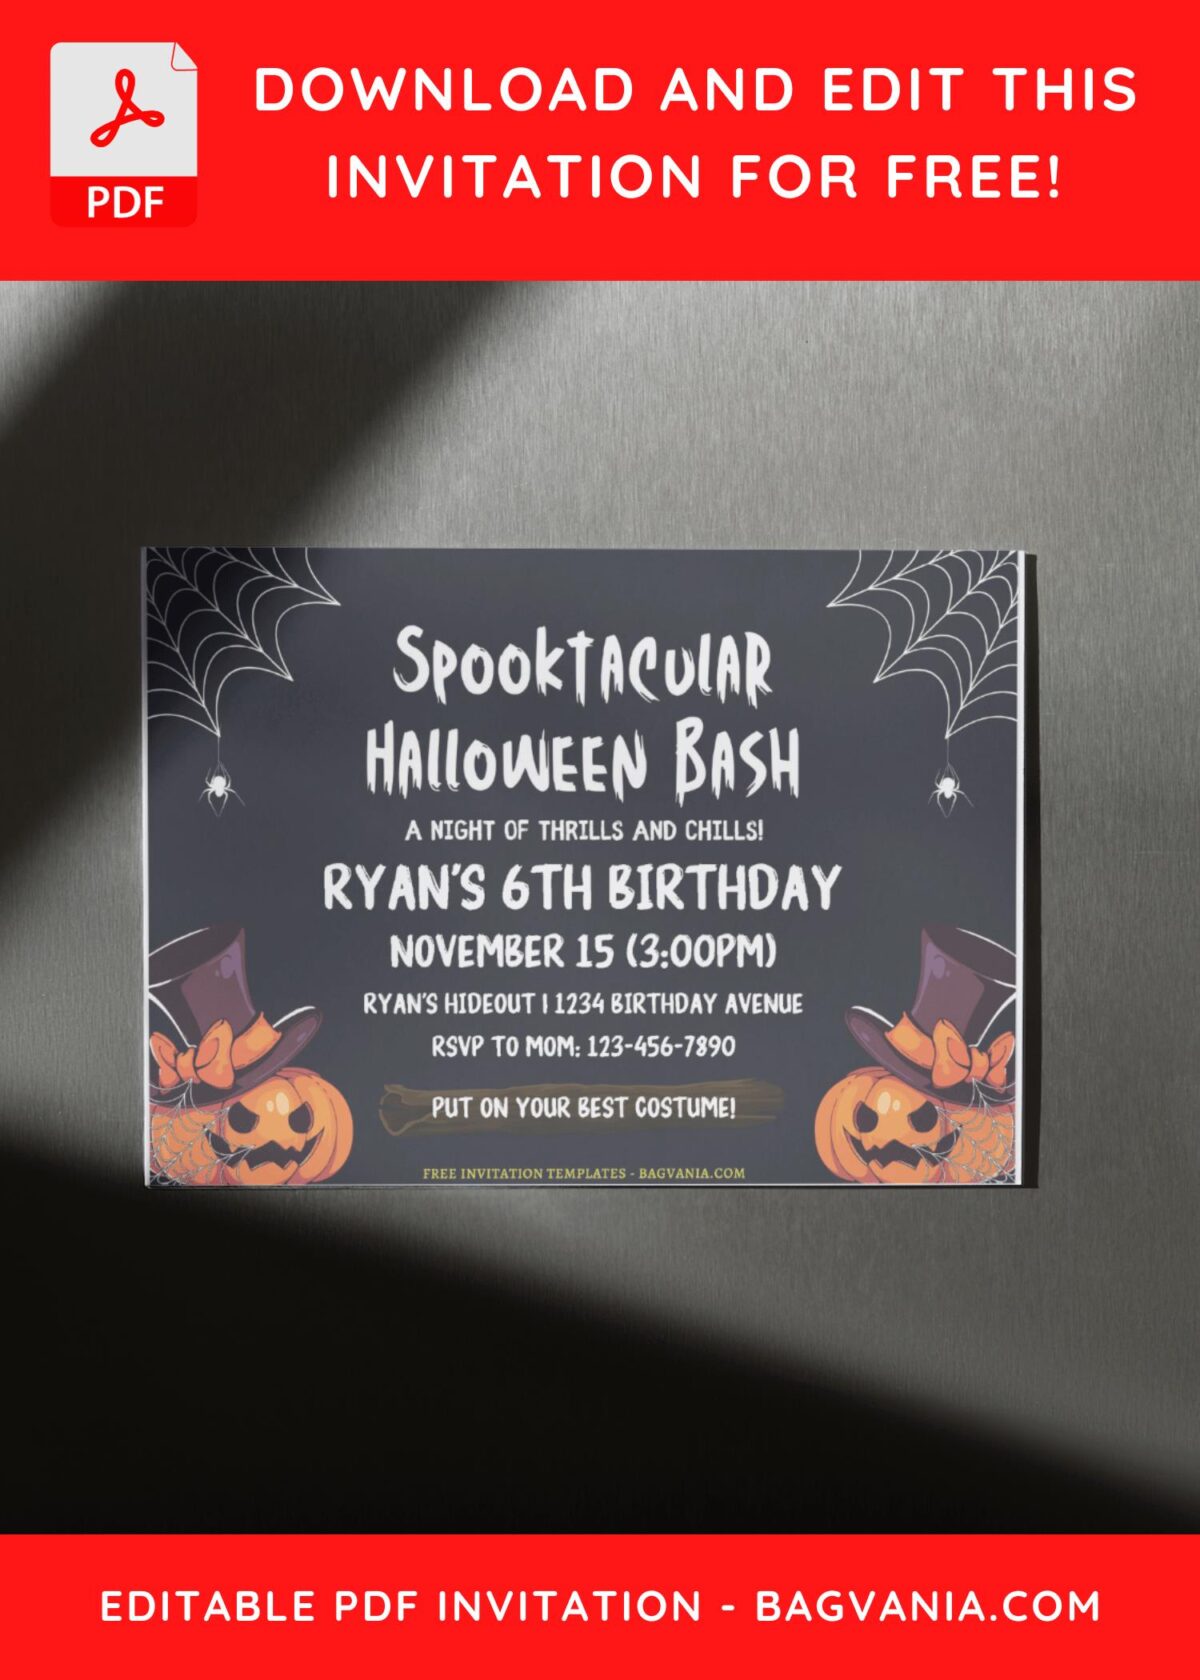 (Free Editable PDF) Spooktacular Halloween Frankenstein Birthday Invitation Templates D